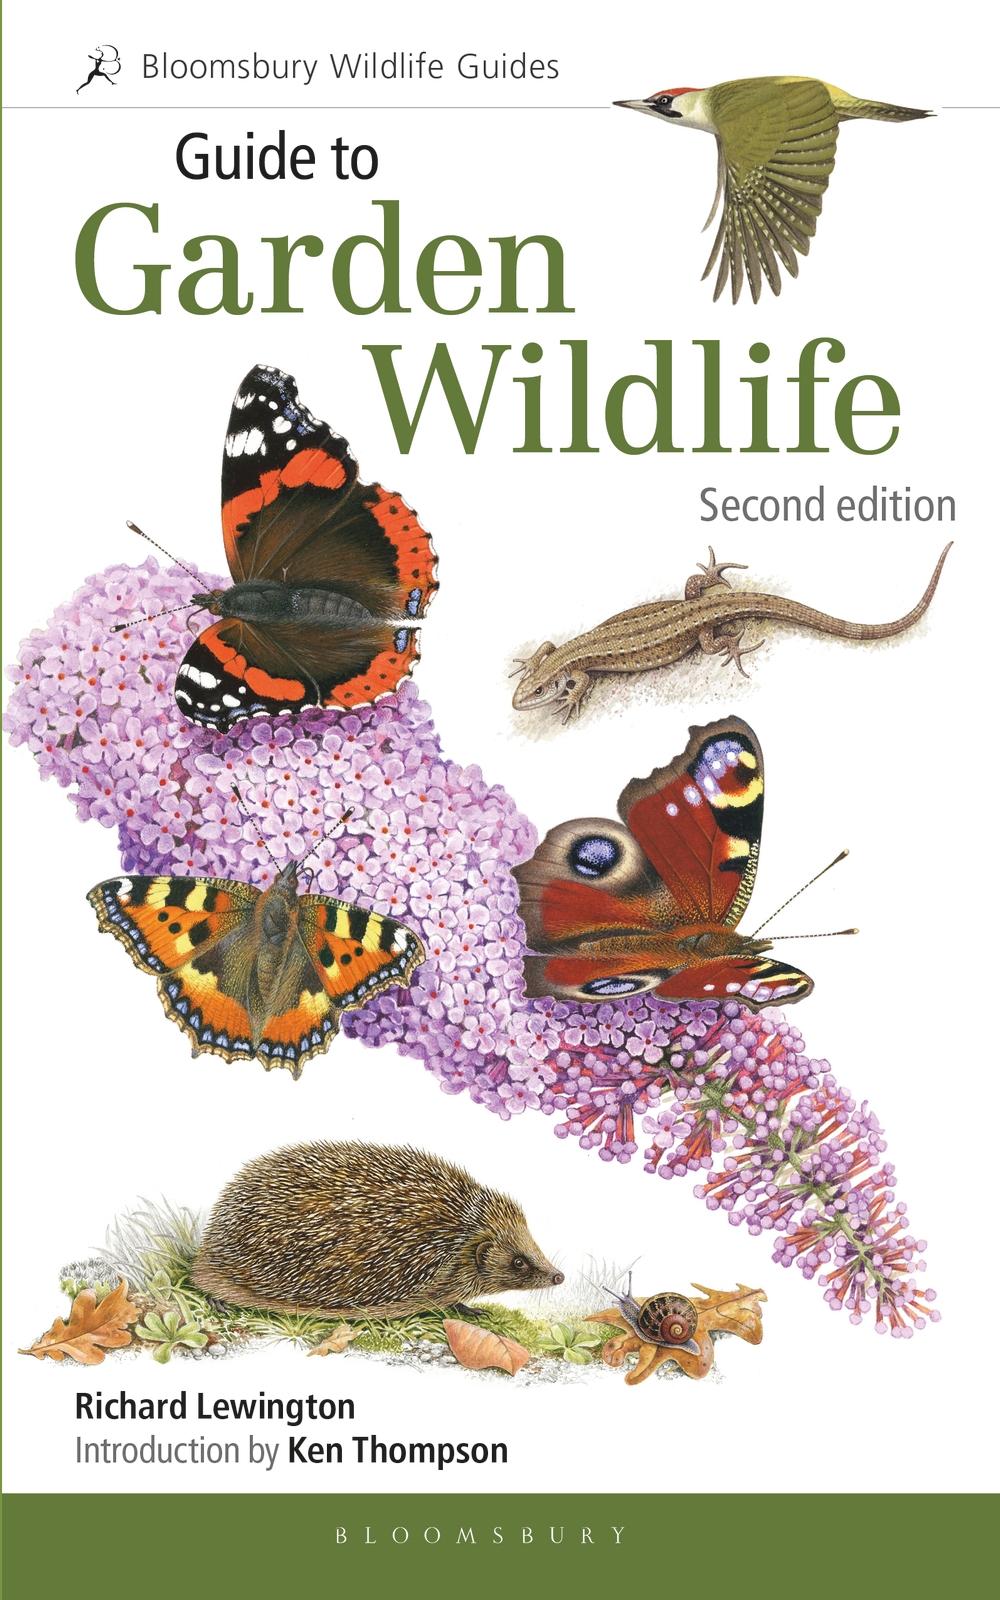 Guide to Garden Wildlife 2nd edition - Richard Lewington